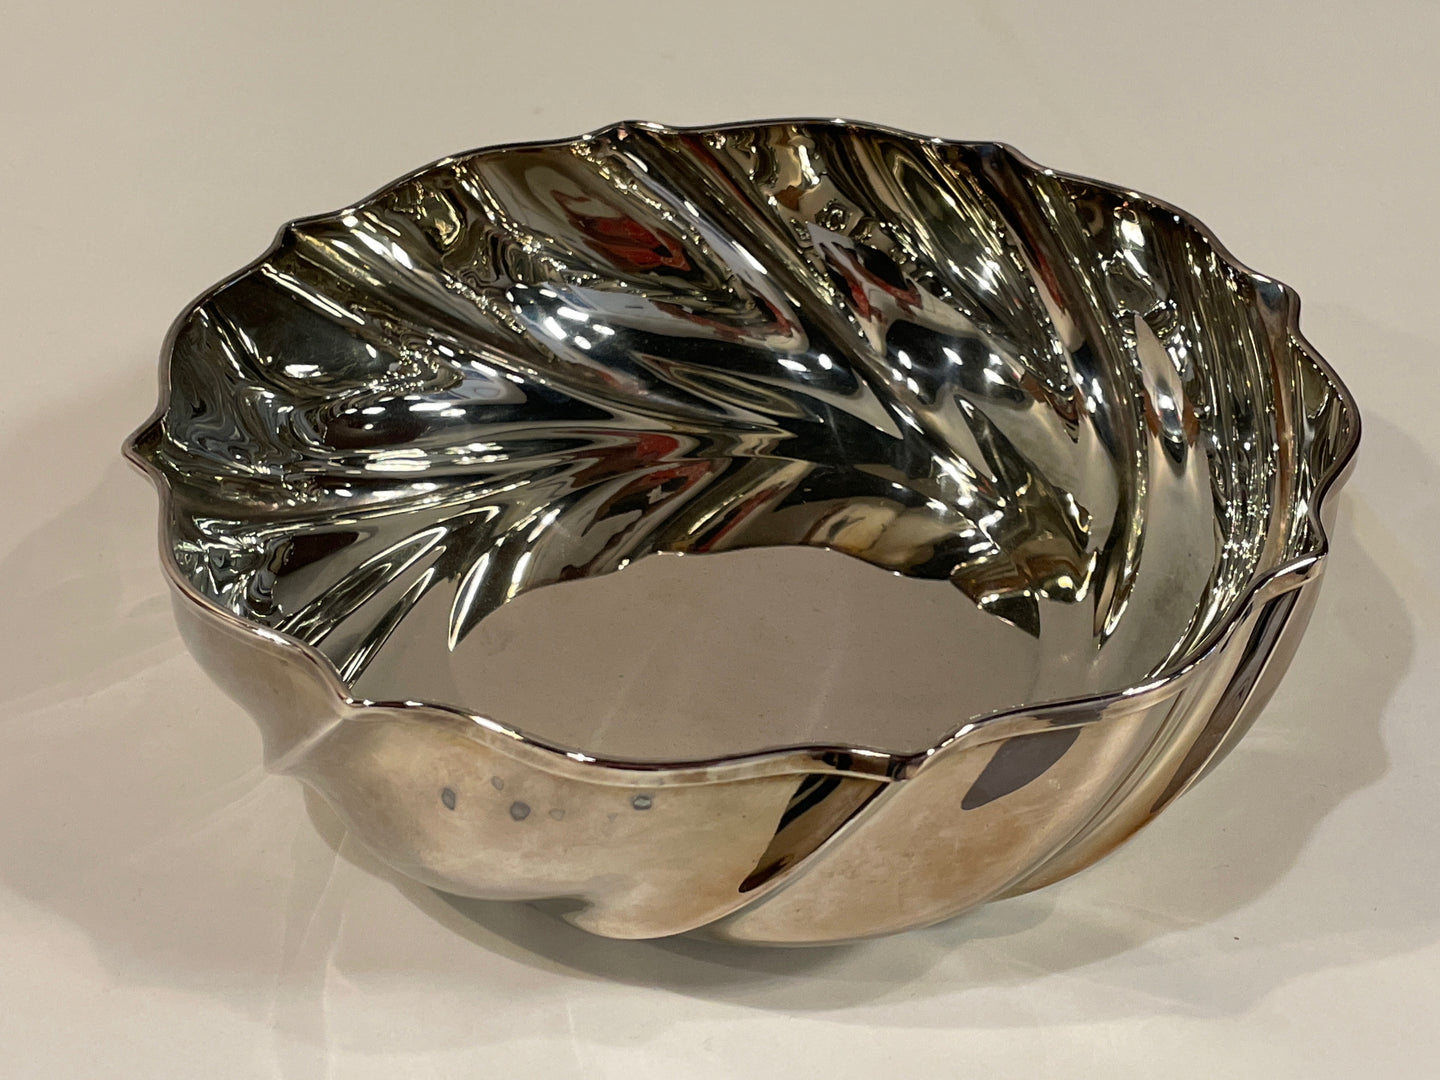 Swirled Silver Plate Bowl